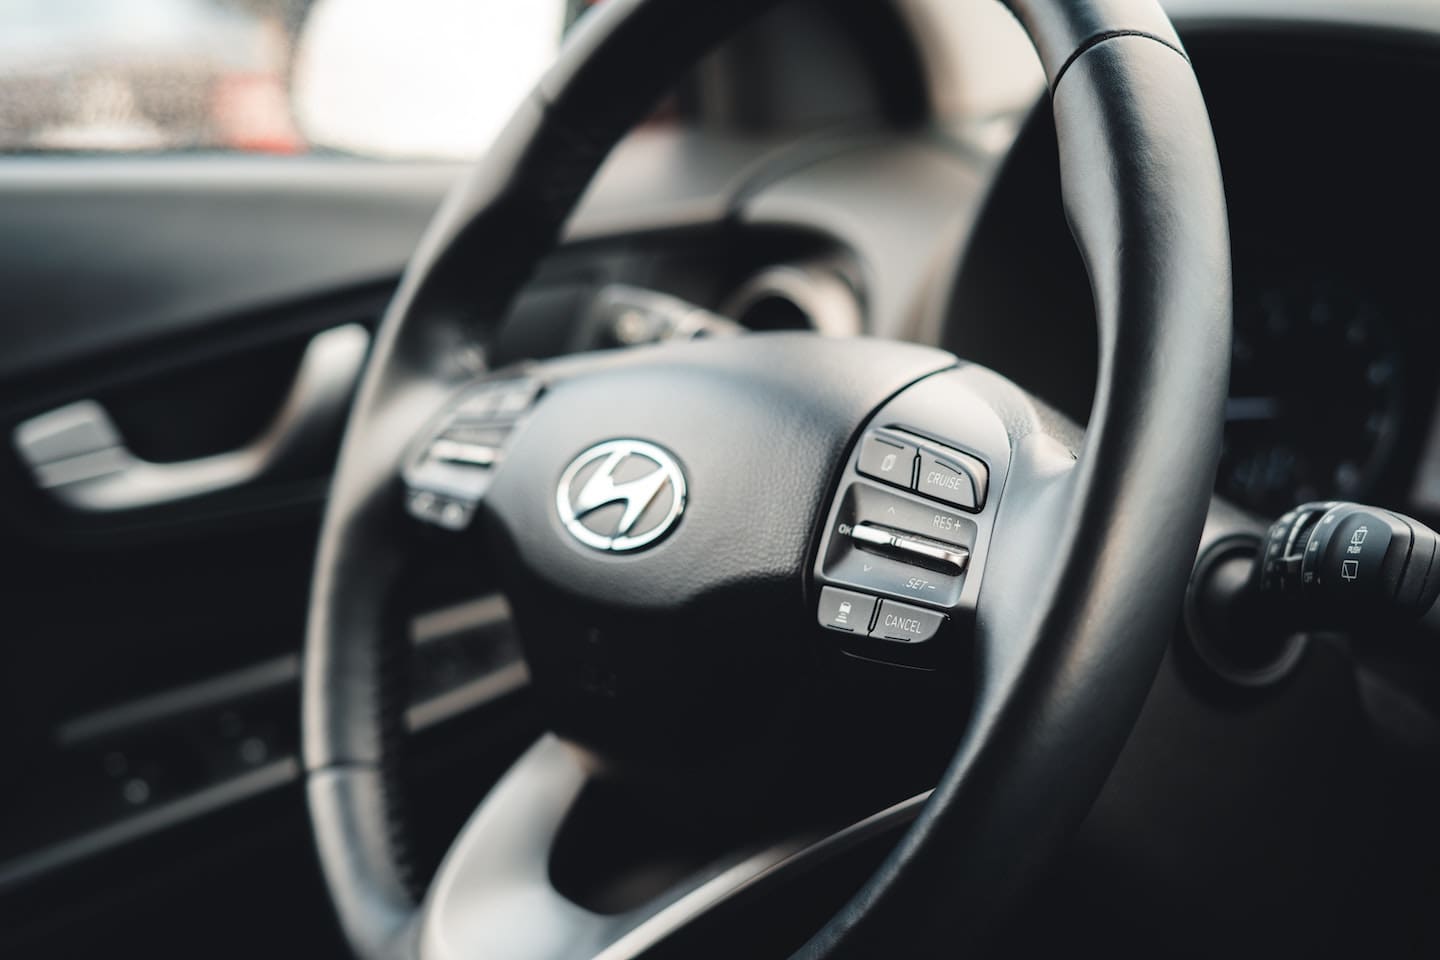 Featured image for “Free steering wheel locks for some Hyundais, Kias”